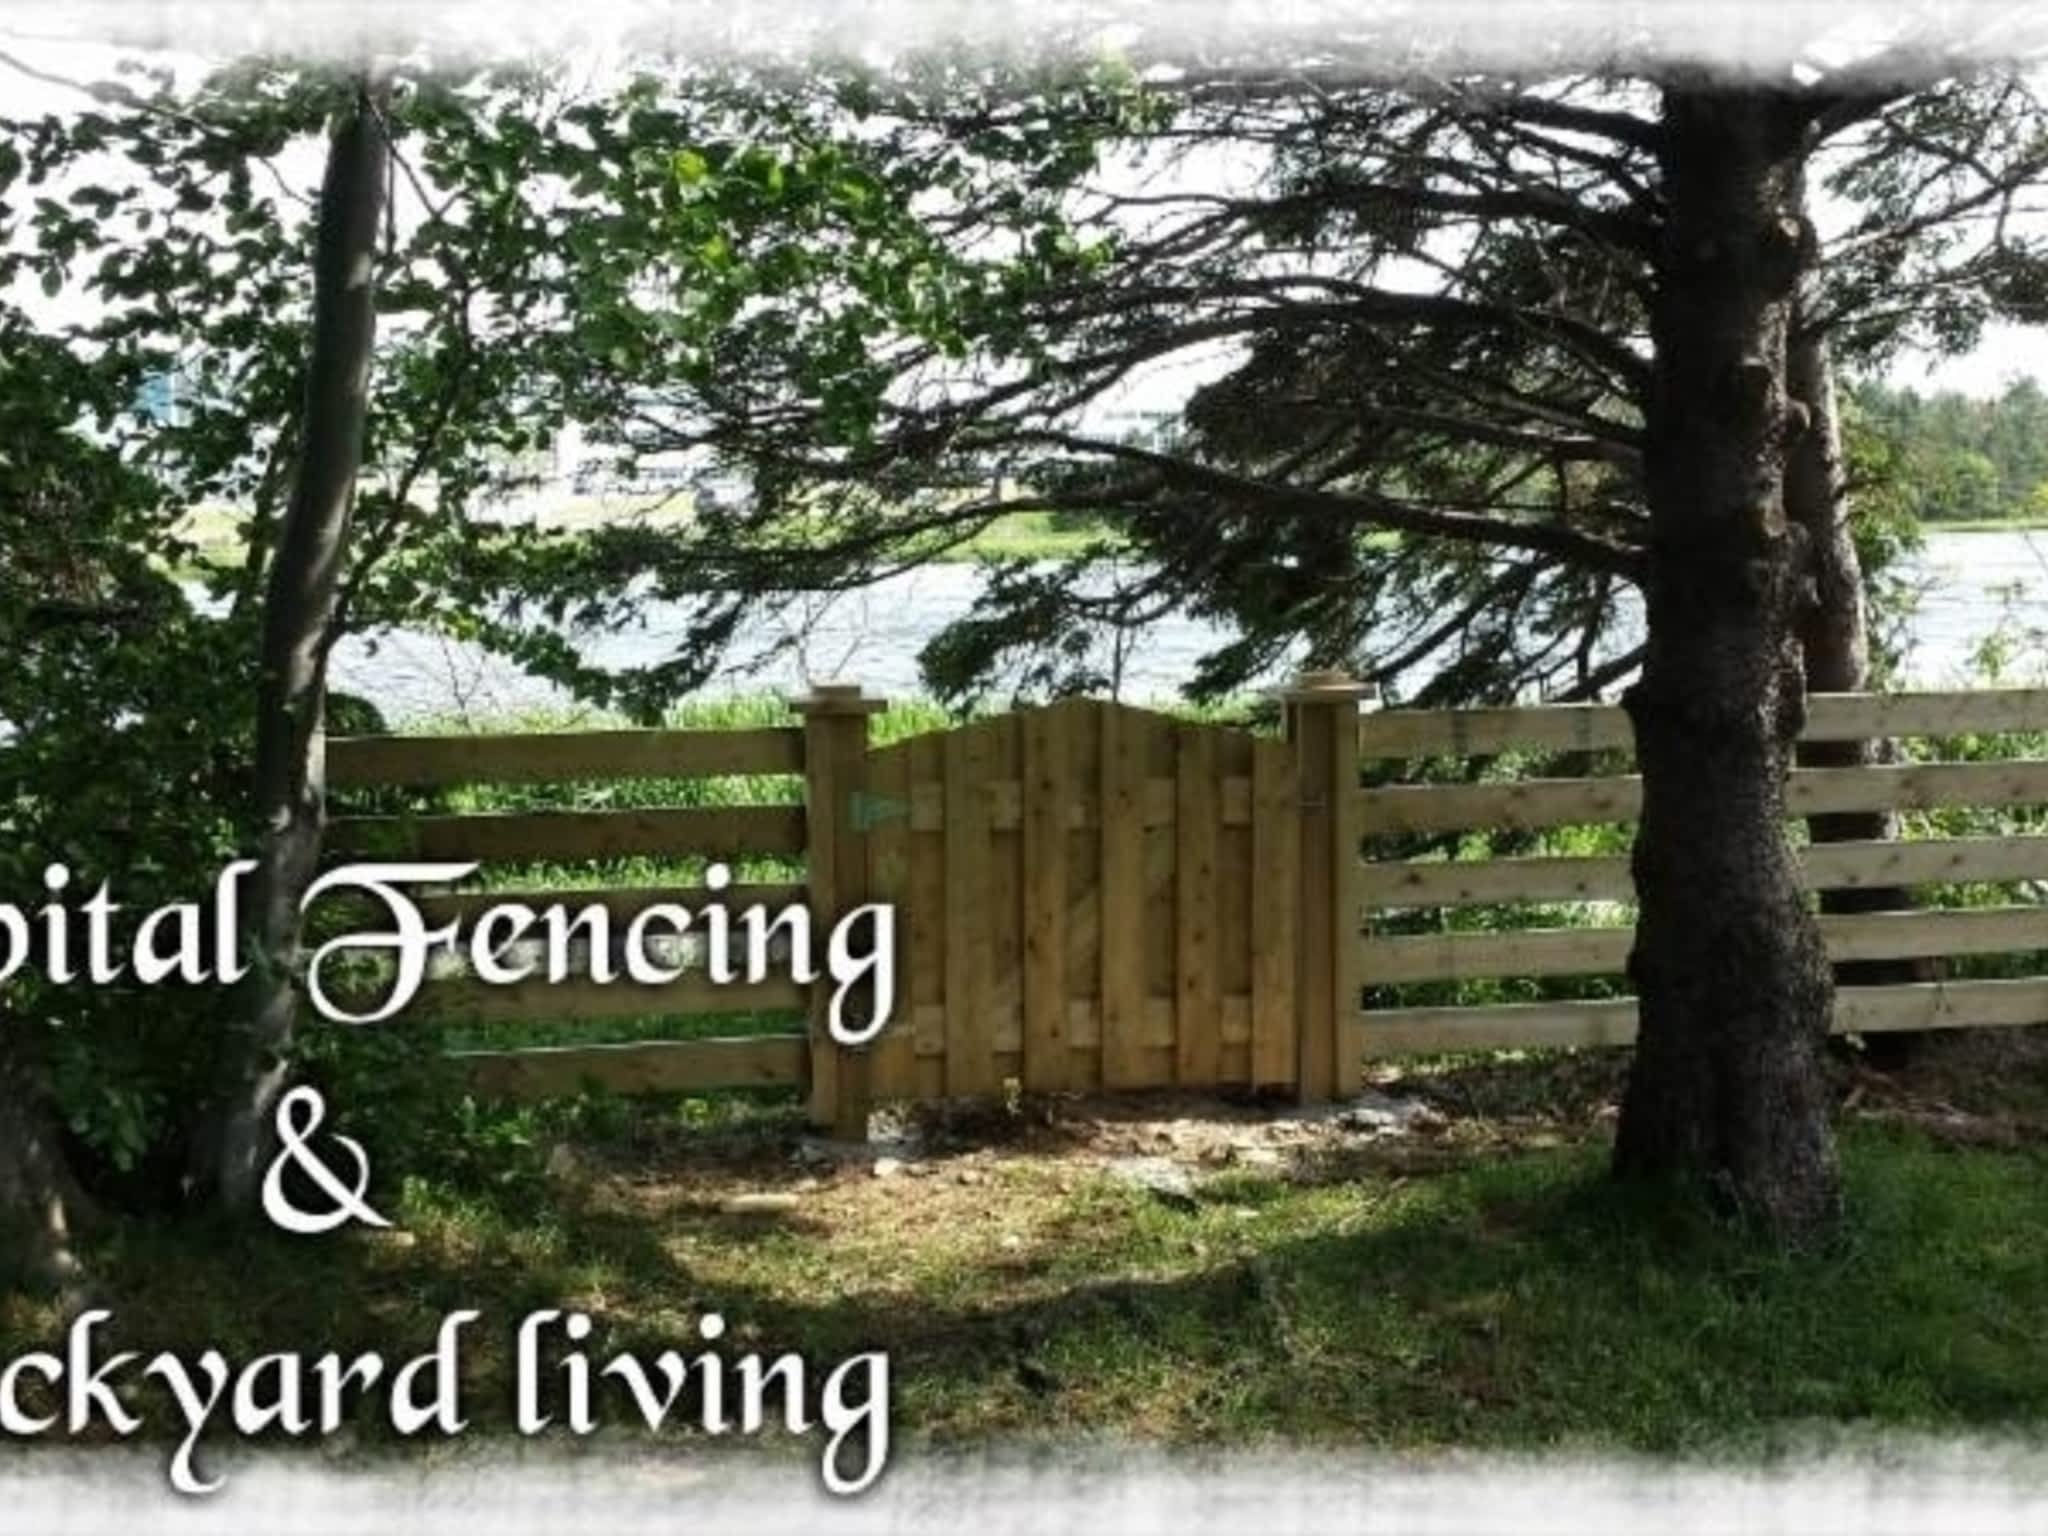 photo Capital Fencing & Backyard Living Inc.